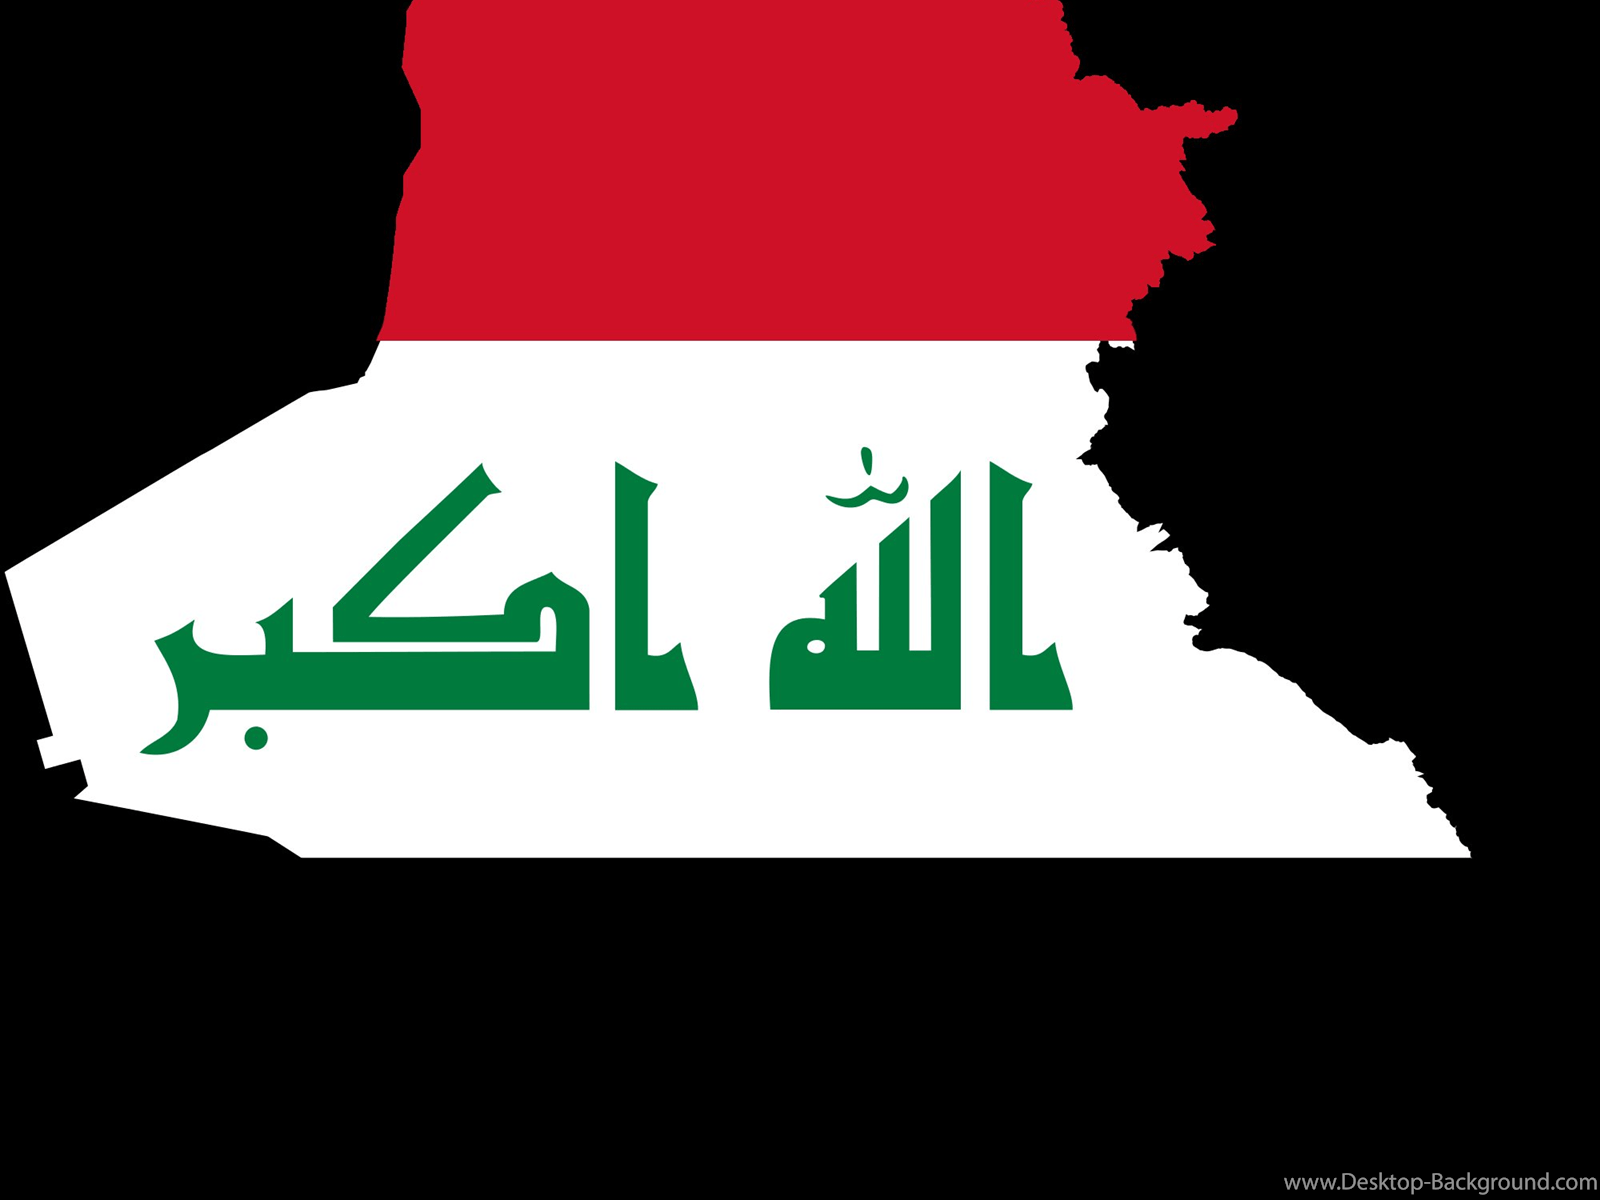 IRAQ FLAG Image Galleries ImageKB.com Desktop Background